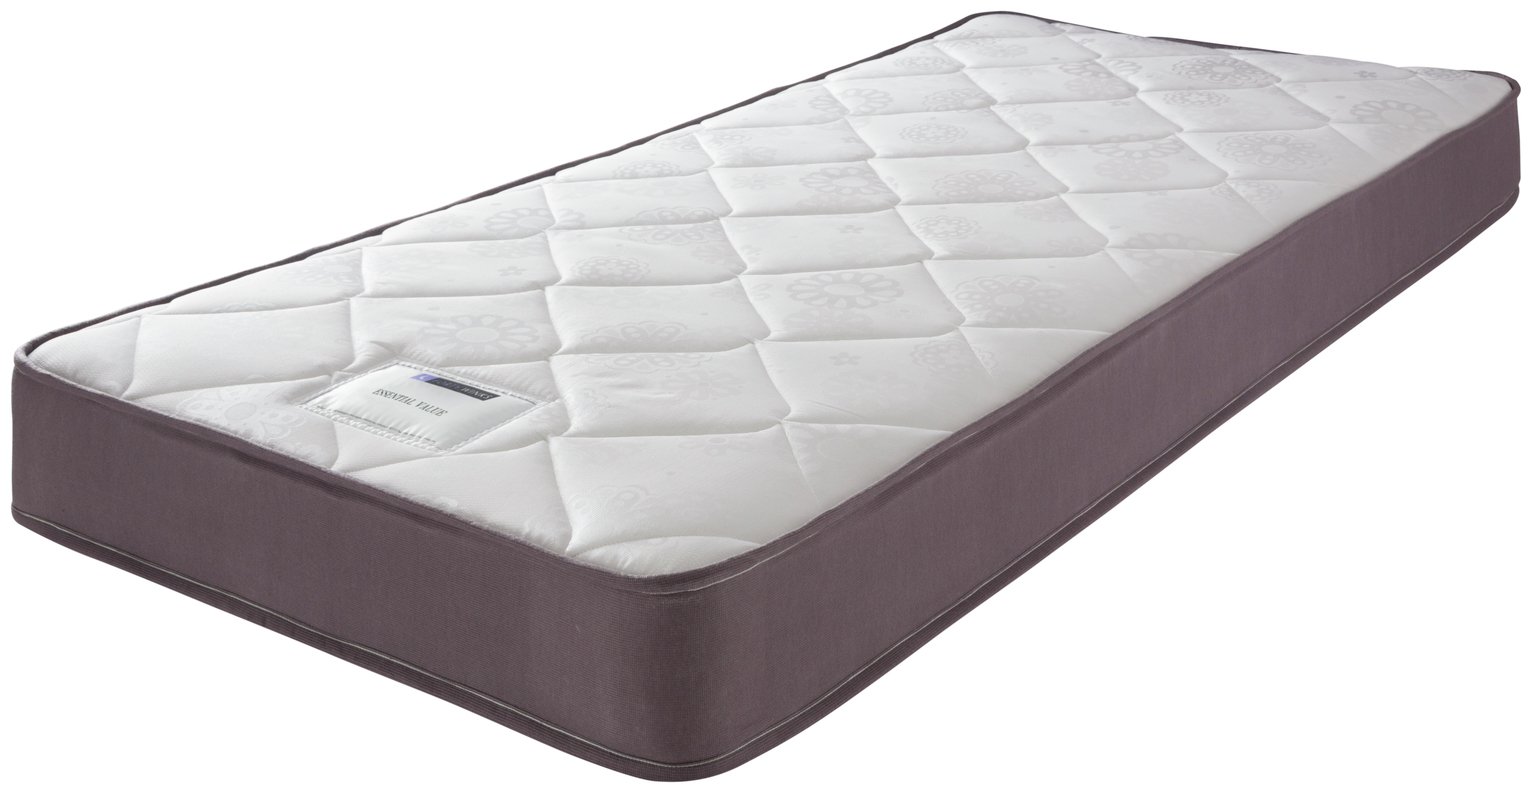 40 winks mattress sale